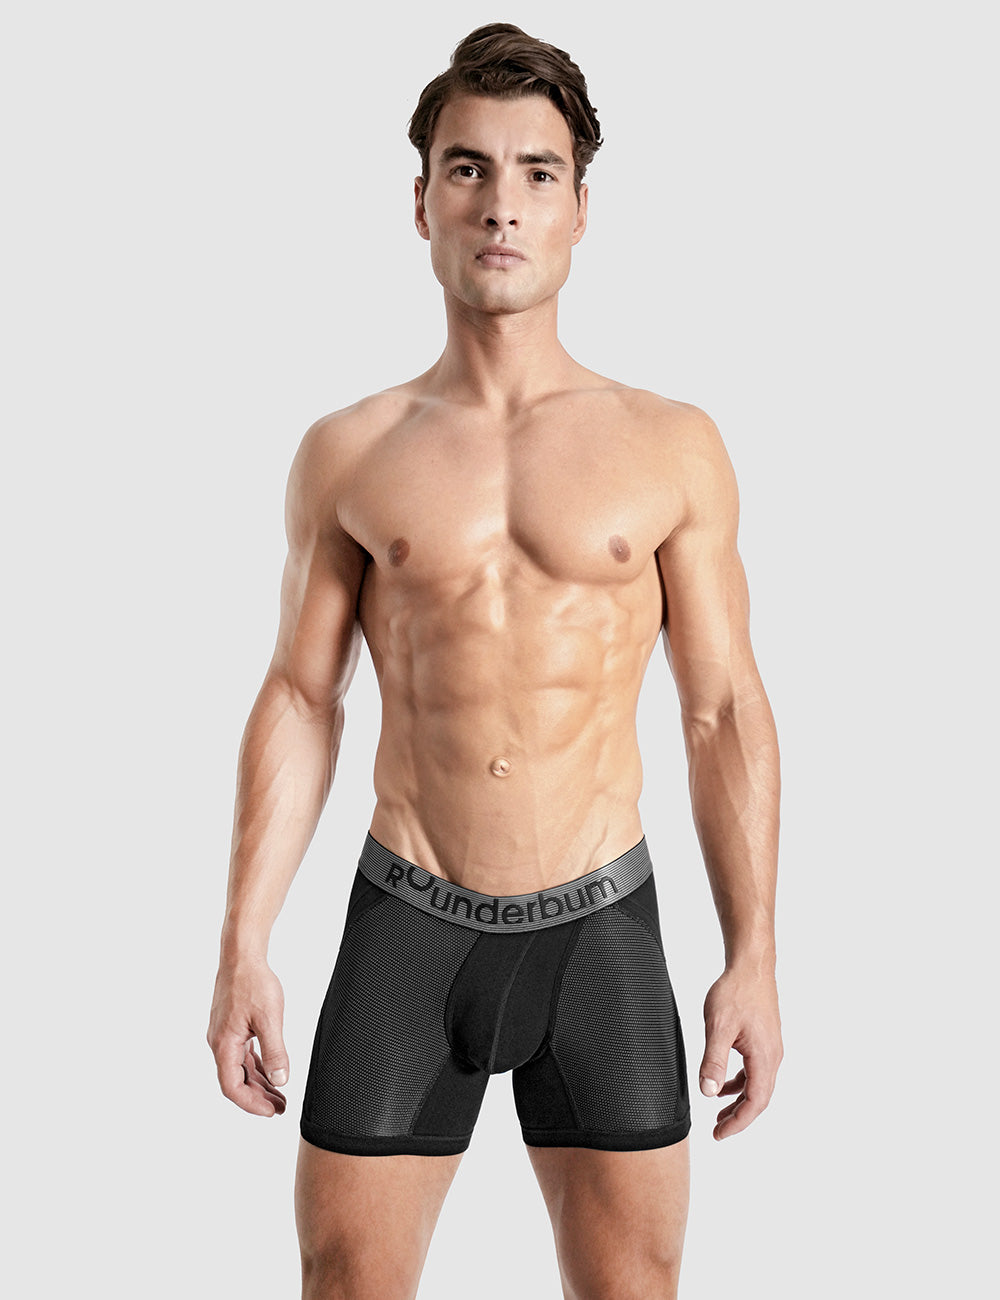 Buy Boxer Online  Boxer Underwear- Rounderbum – Rounderbum LLC